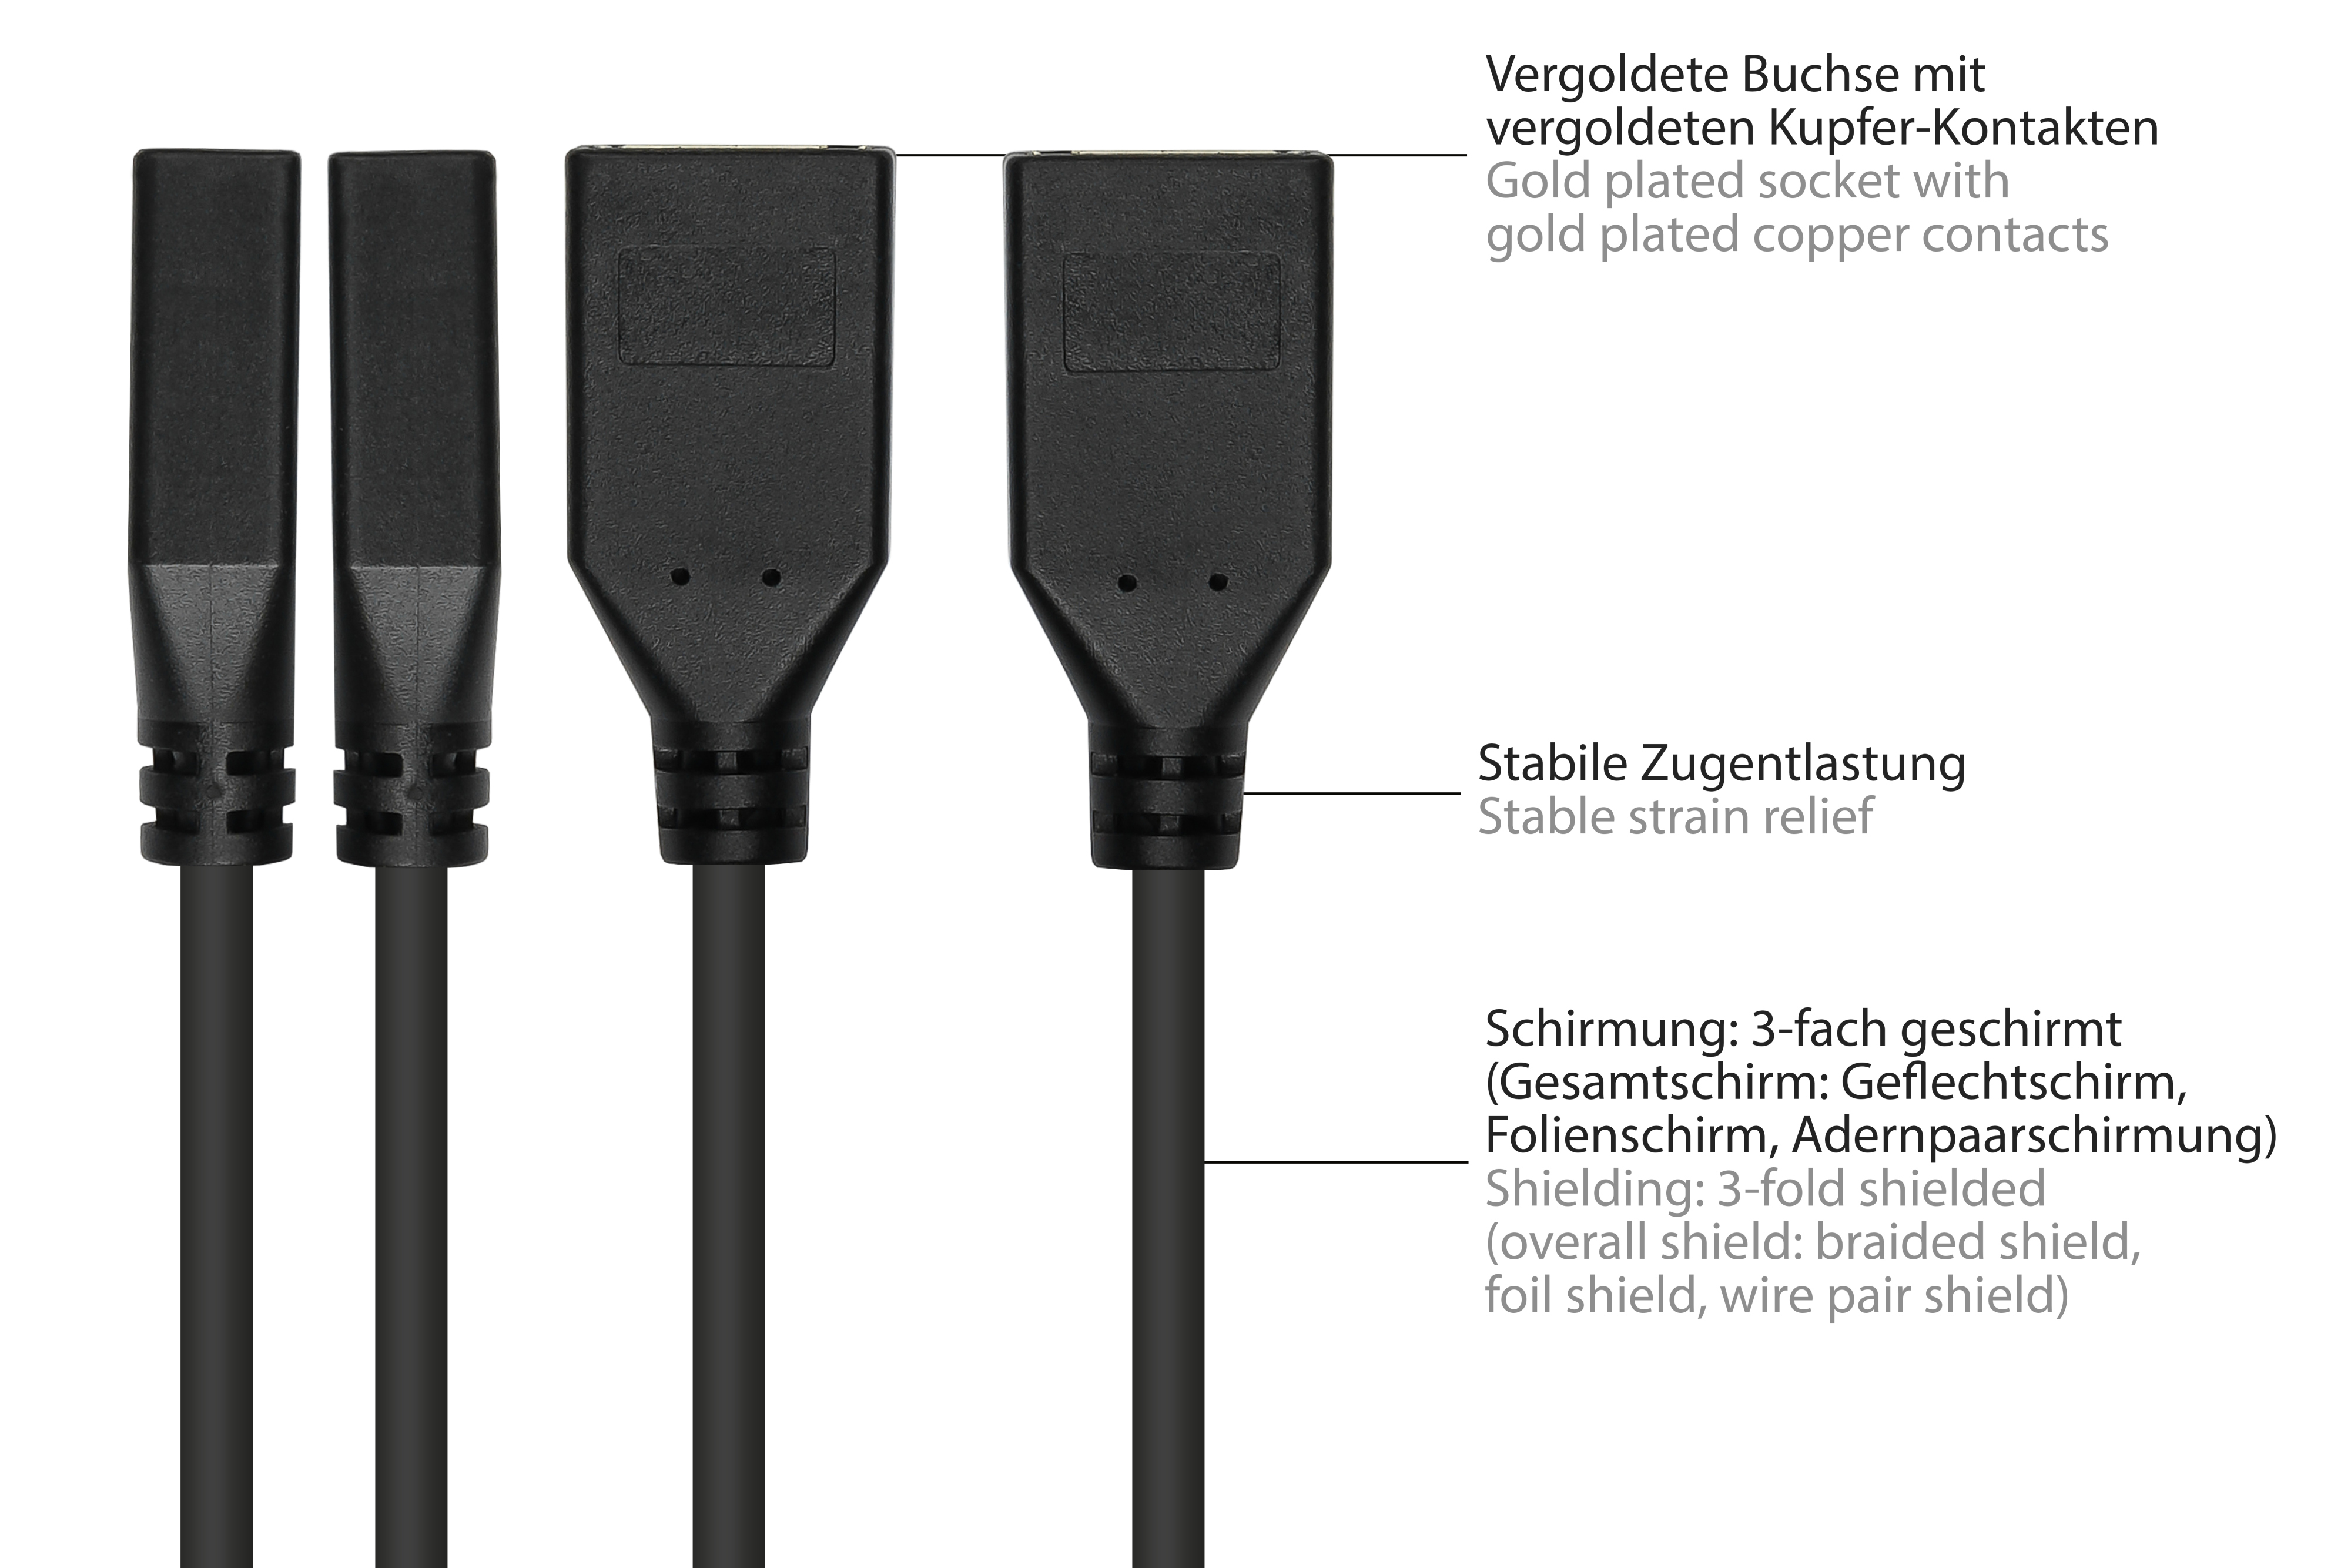 + Buchse, HDMI Displayport, GOOD m CONNECTIONS USB Adapterkabel Stecker 0,3